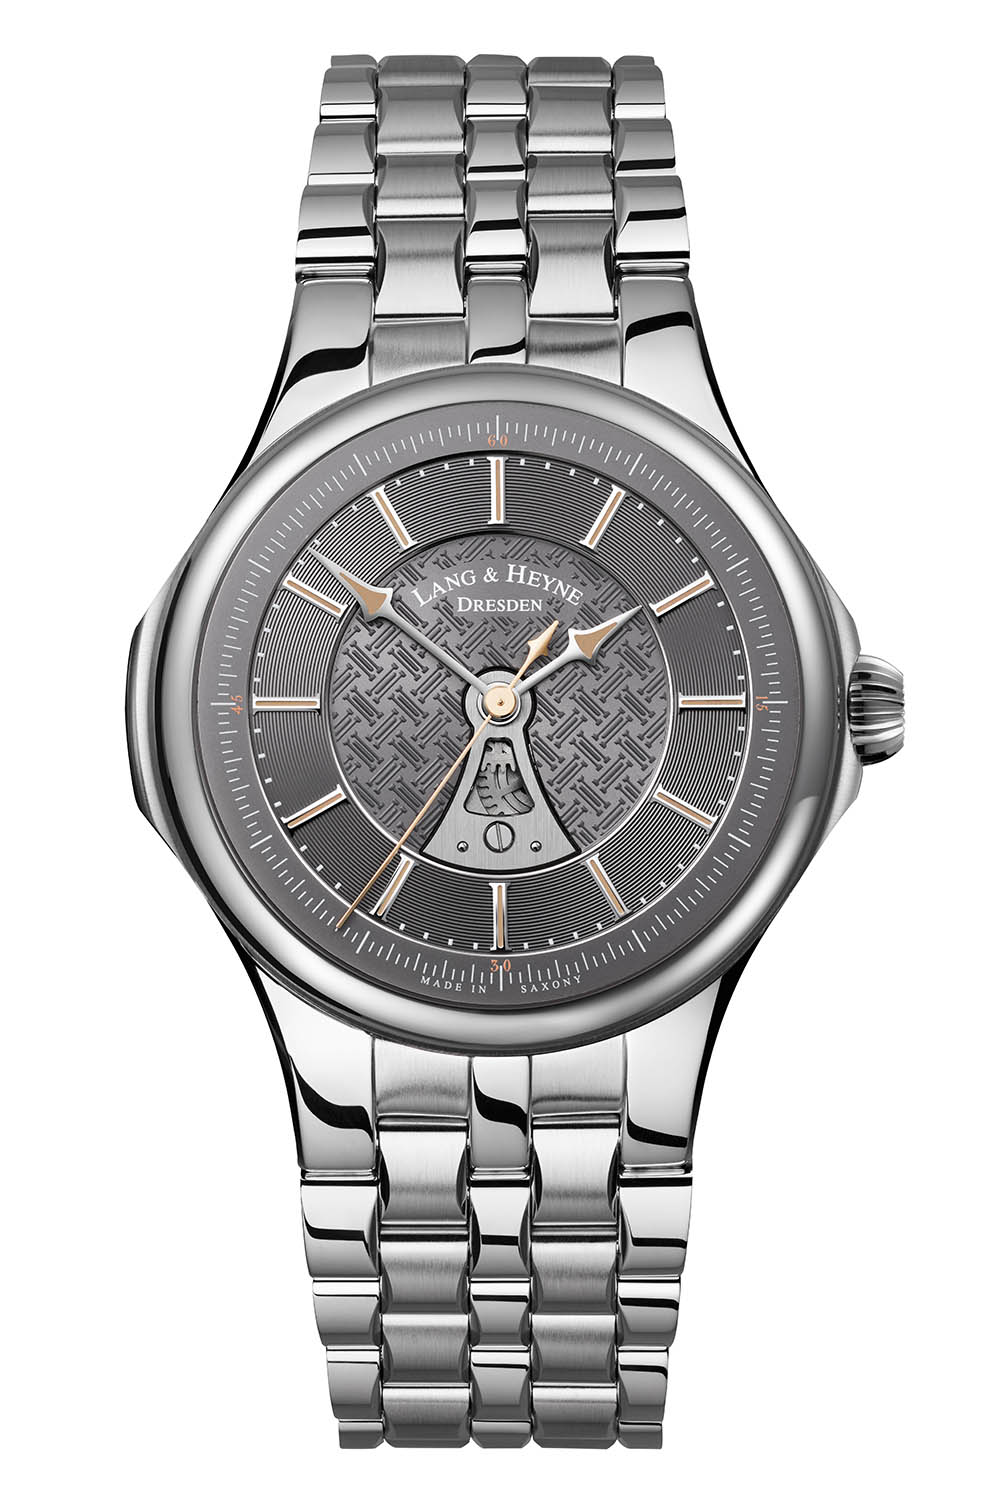 Lang & Heyne Hektor Sports Watch With Integrated Bracelet Grey